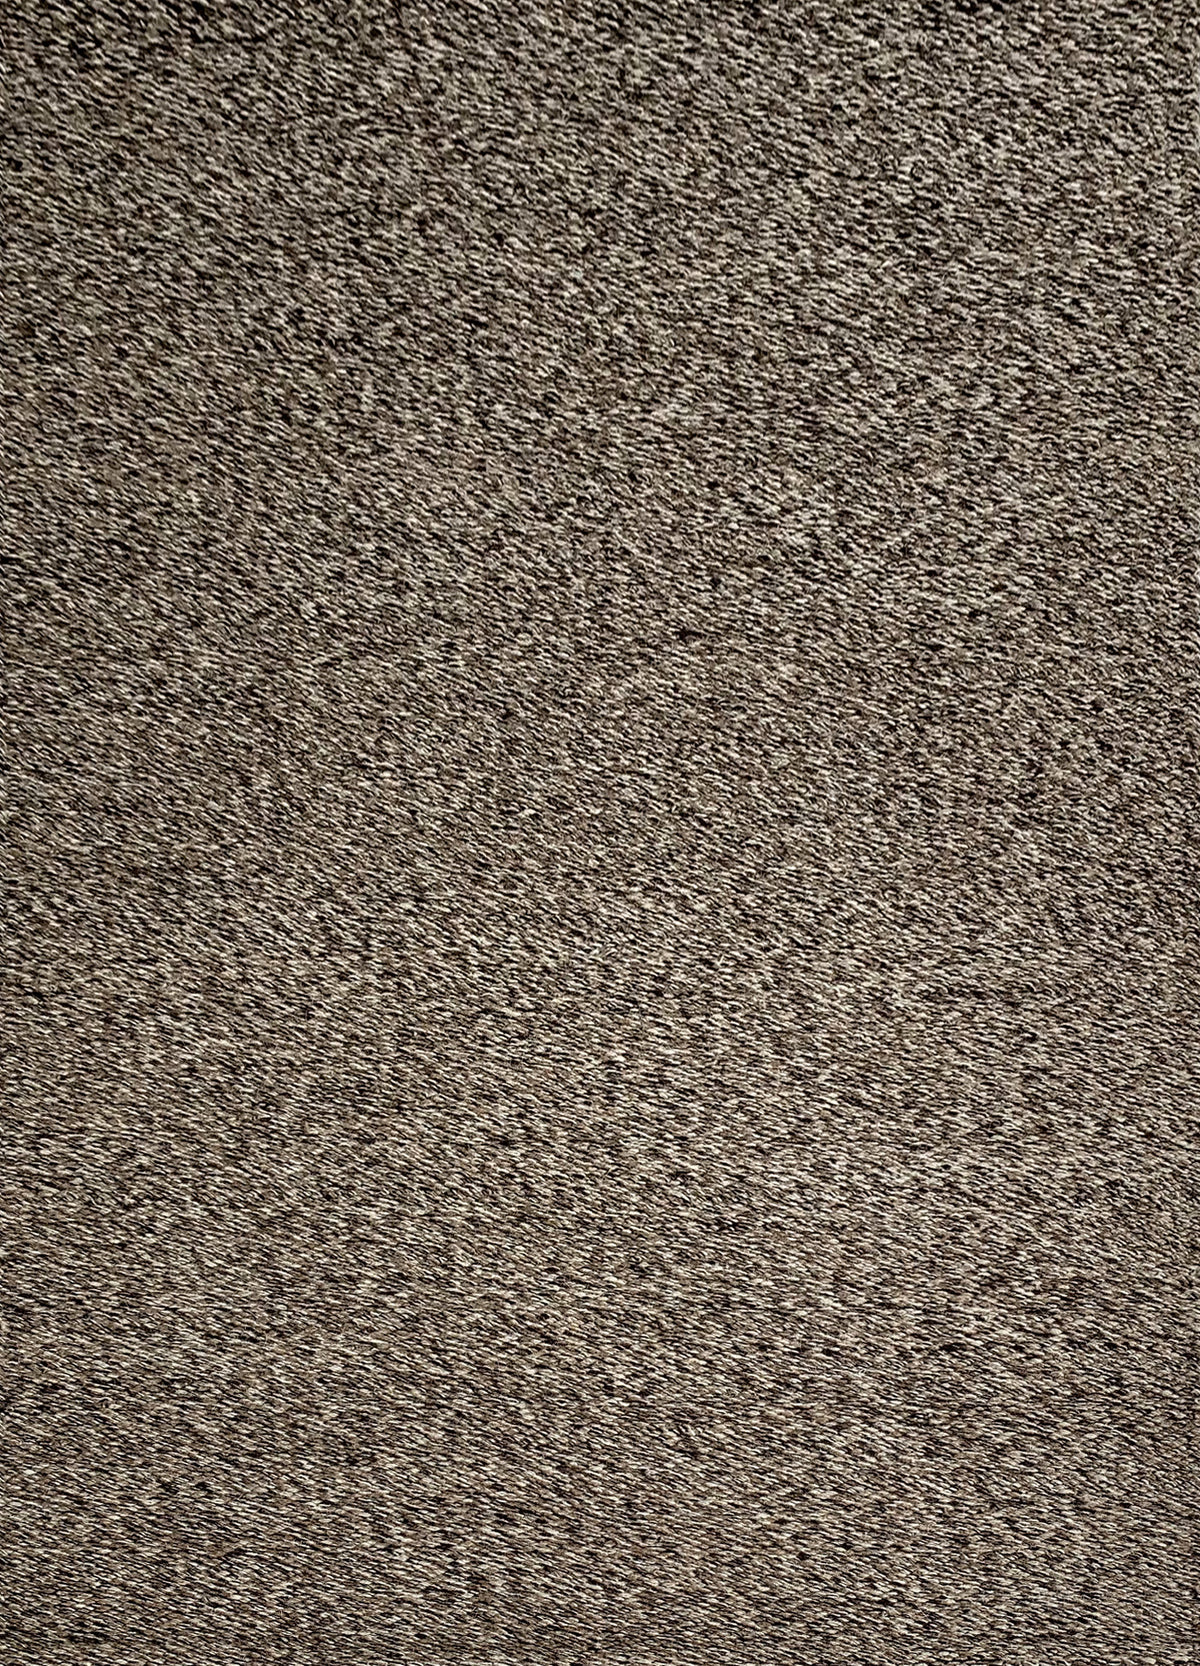 Rugslane Brown Plain Kilim Durry Carpet 4.8ft X 6.9ft